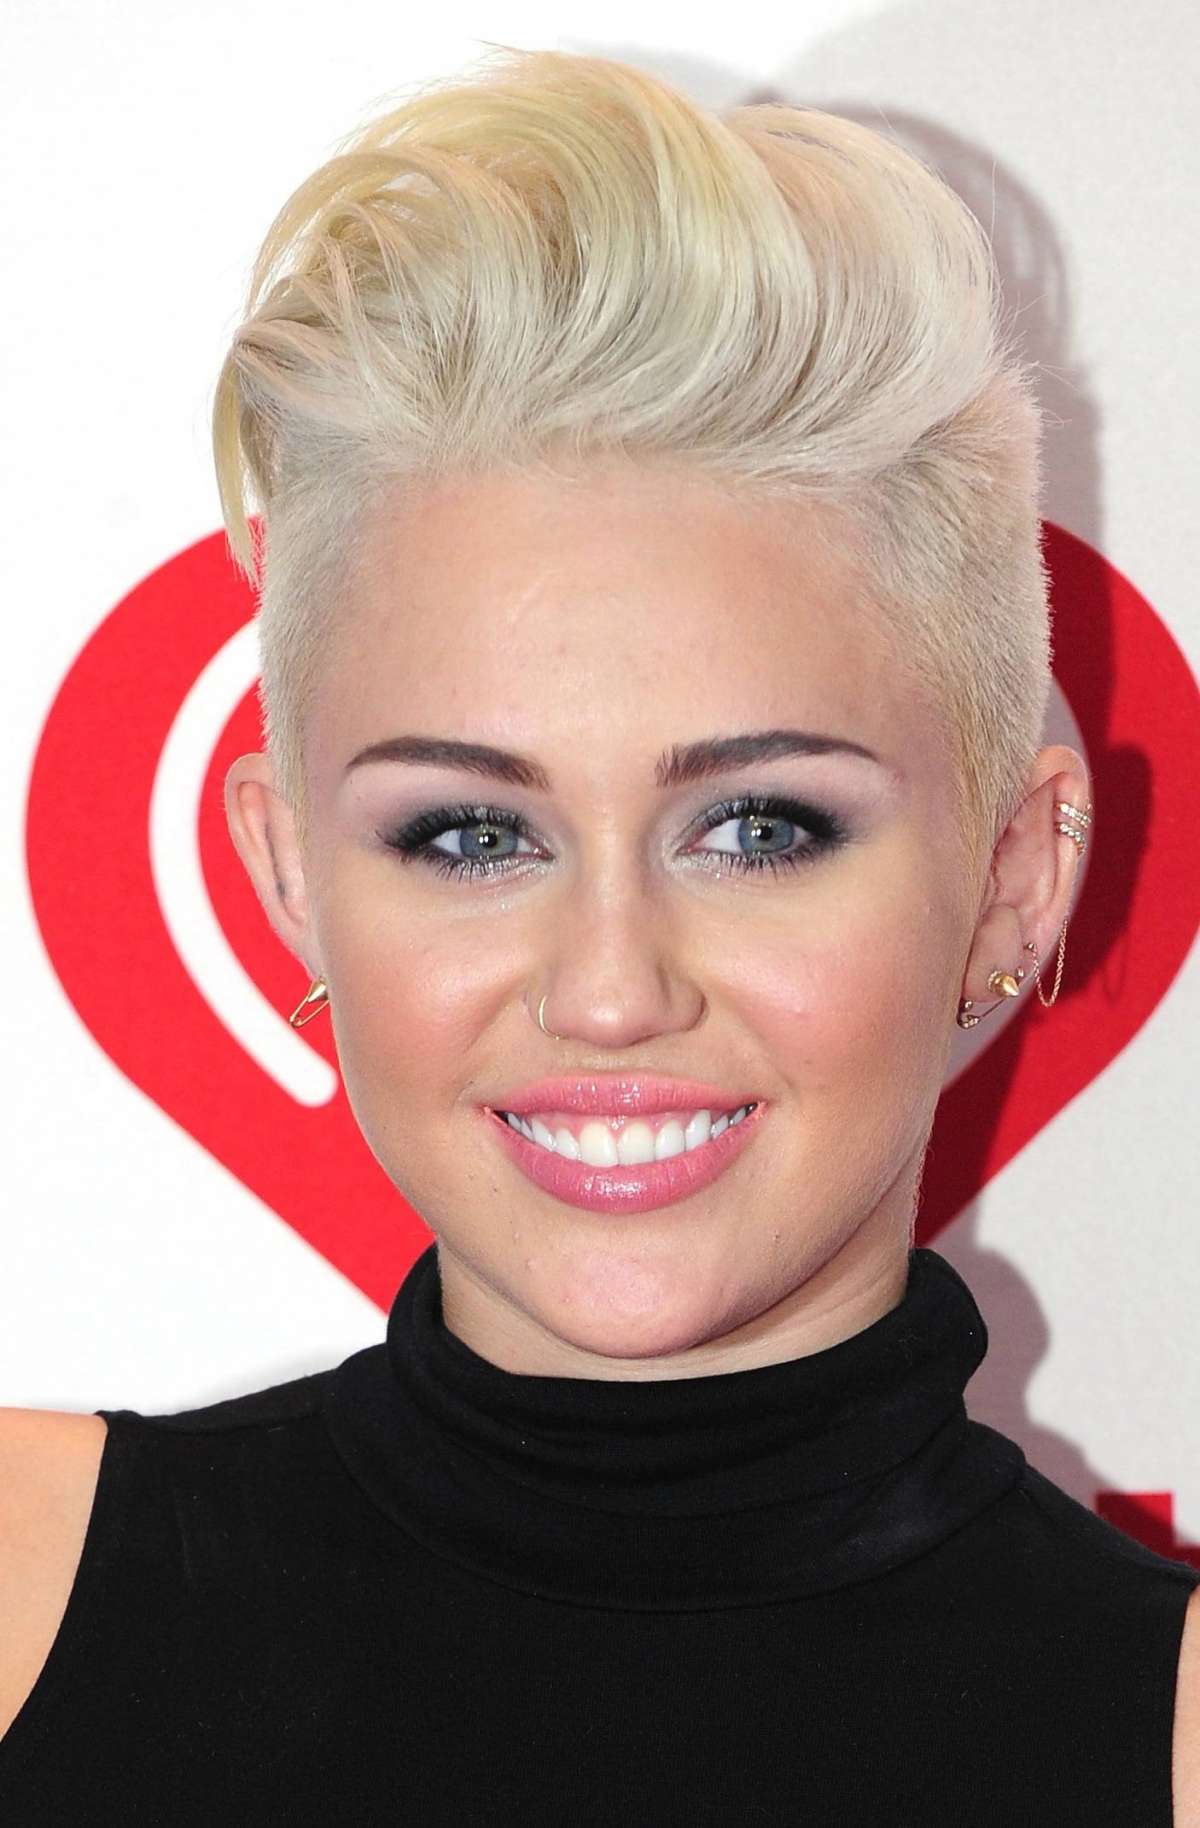 Miley Cirus beauty punk look